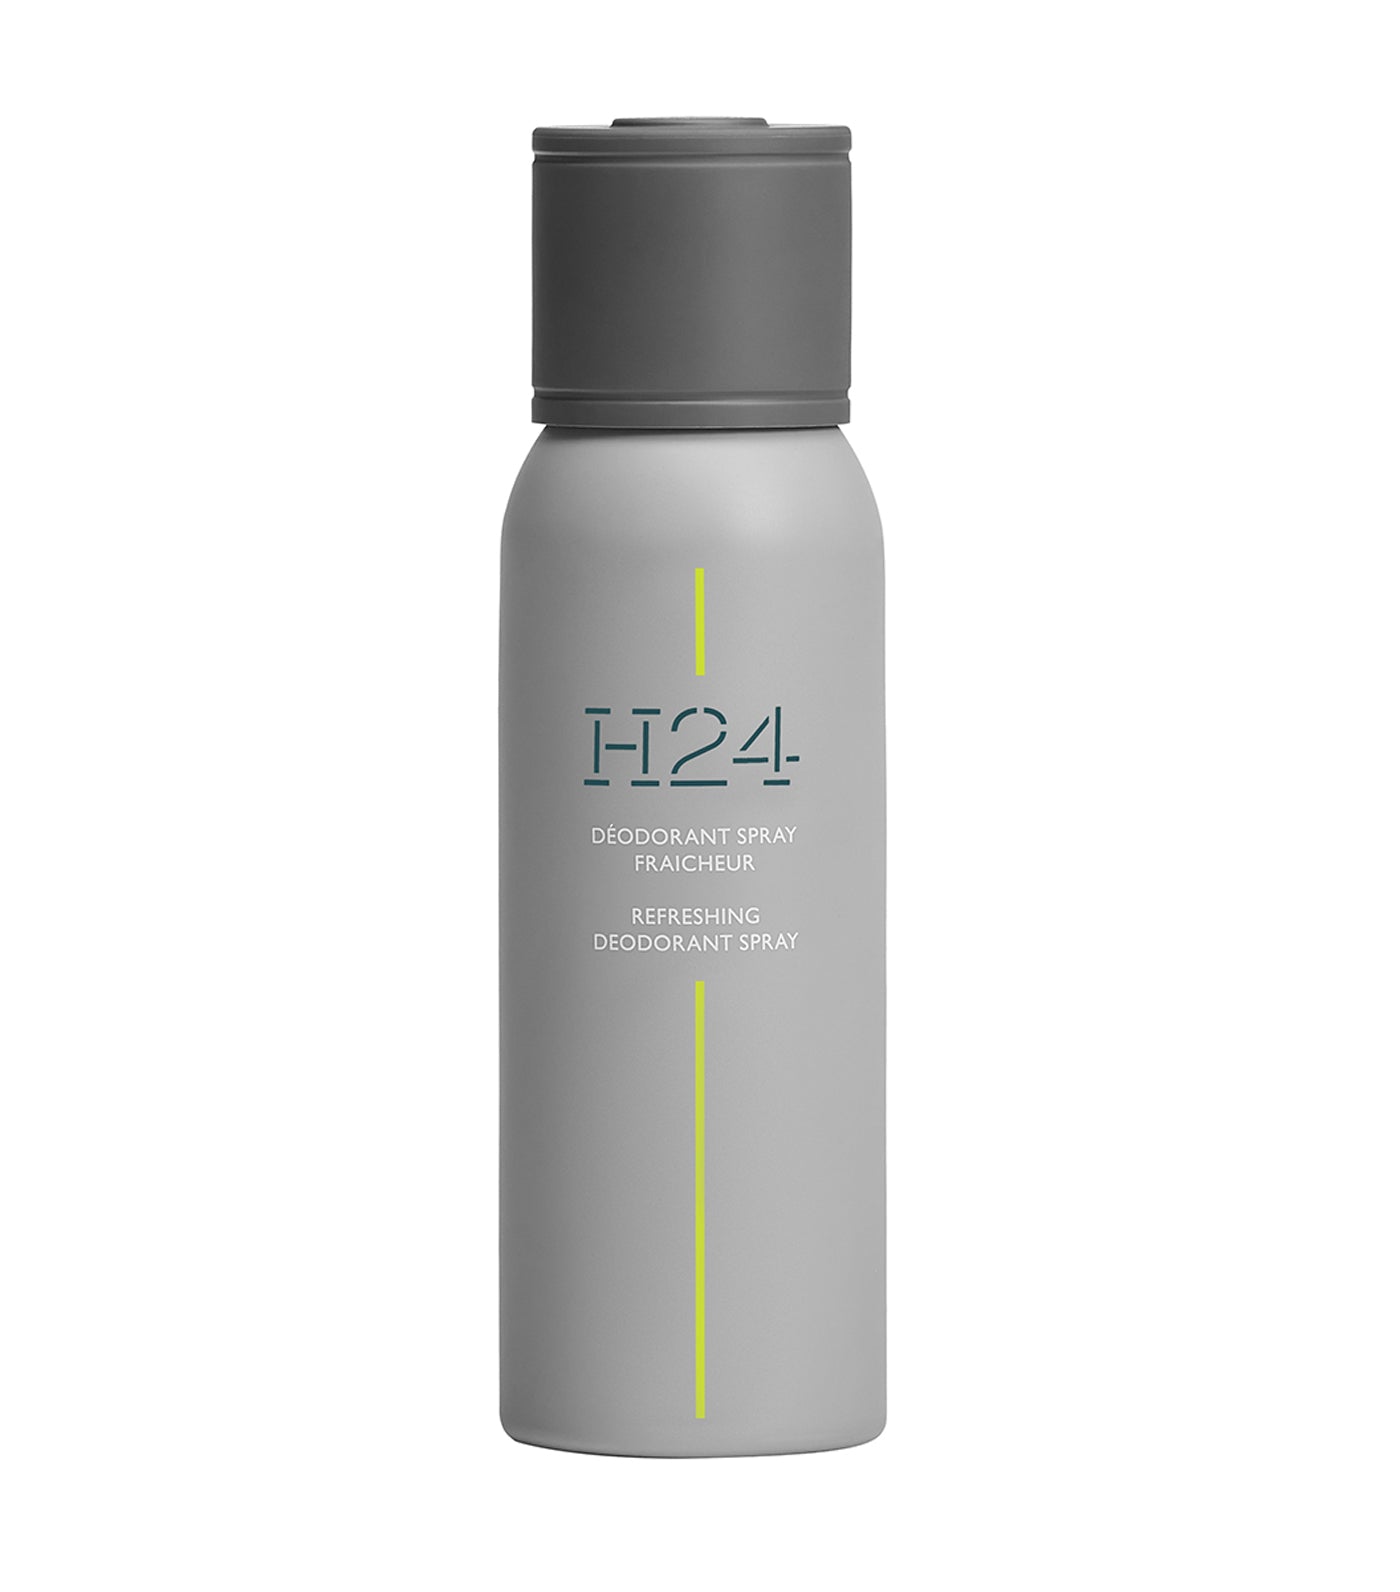 H24, refreshing spray deodorant 150ml